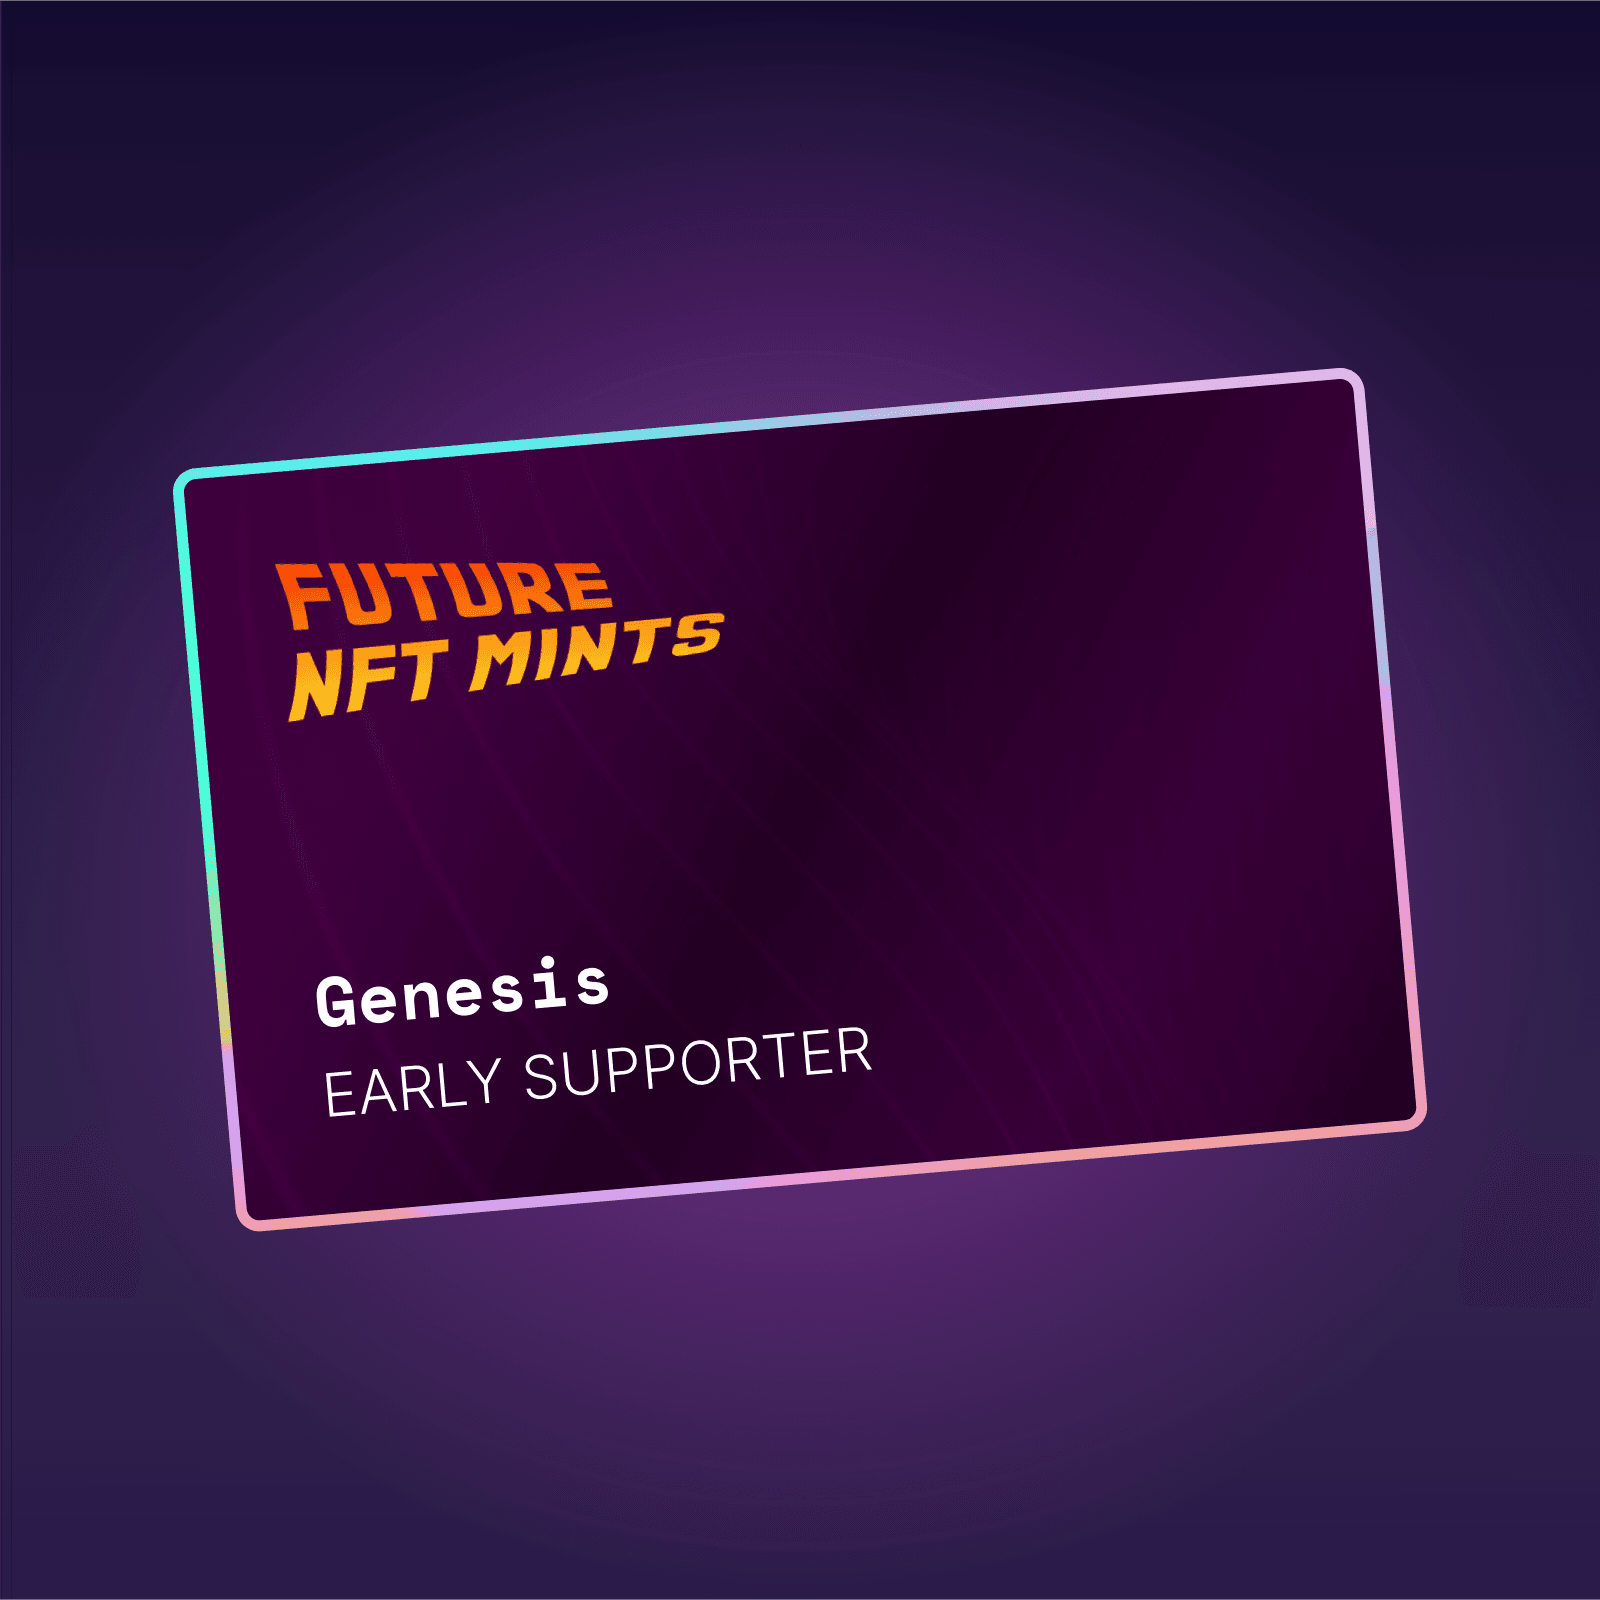 Future NFT Mints - Genesis NFT